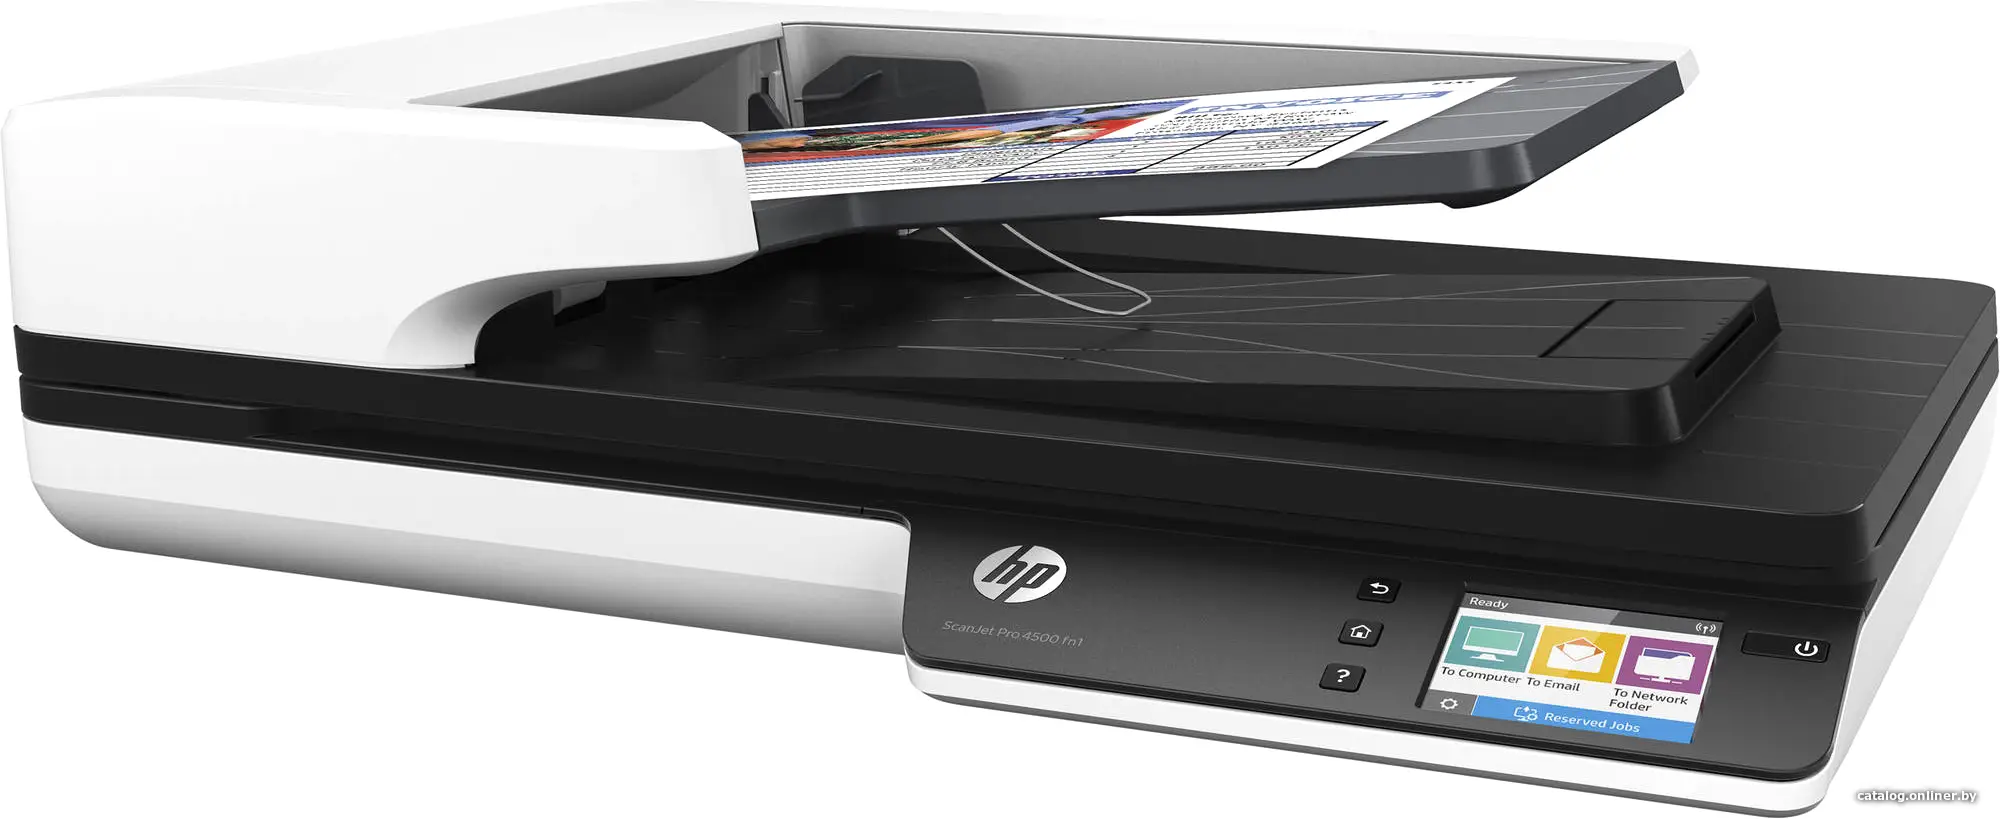 Купить HP ScanJet Pro 4500 fn1 Network Scanner сканер, цена, опт и розница